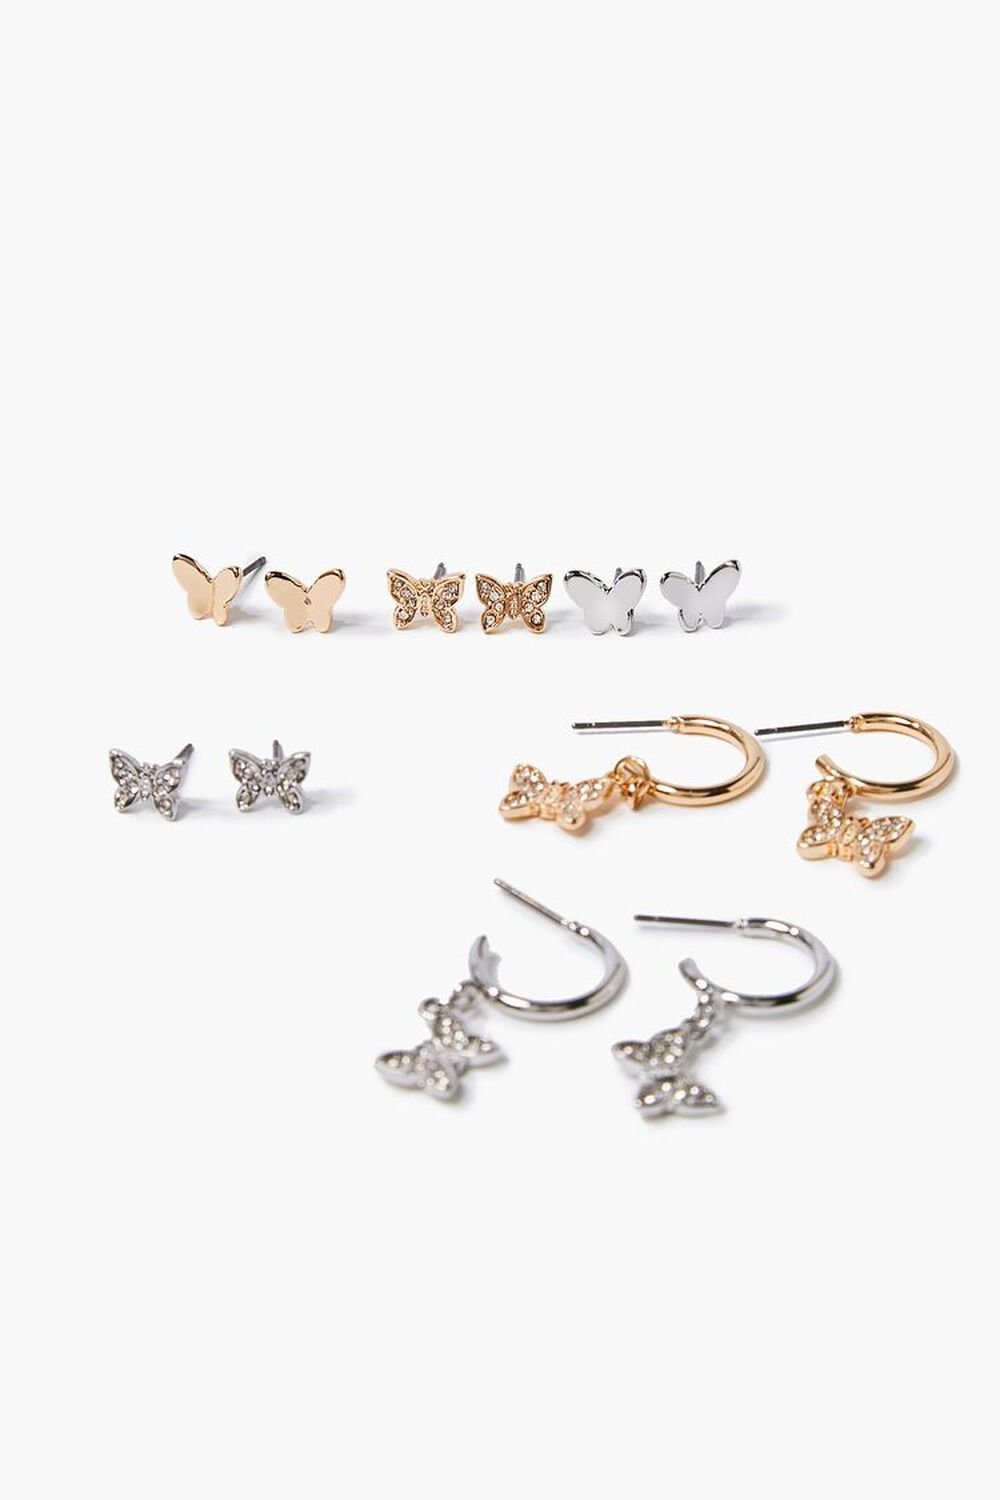 GOLD/SILVER Butterfly Charm Hoop & Stud Earring Set, image 1